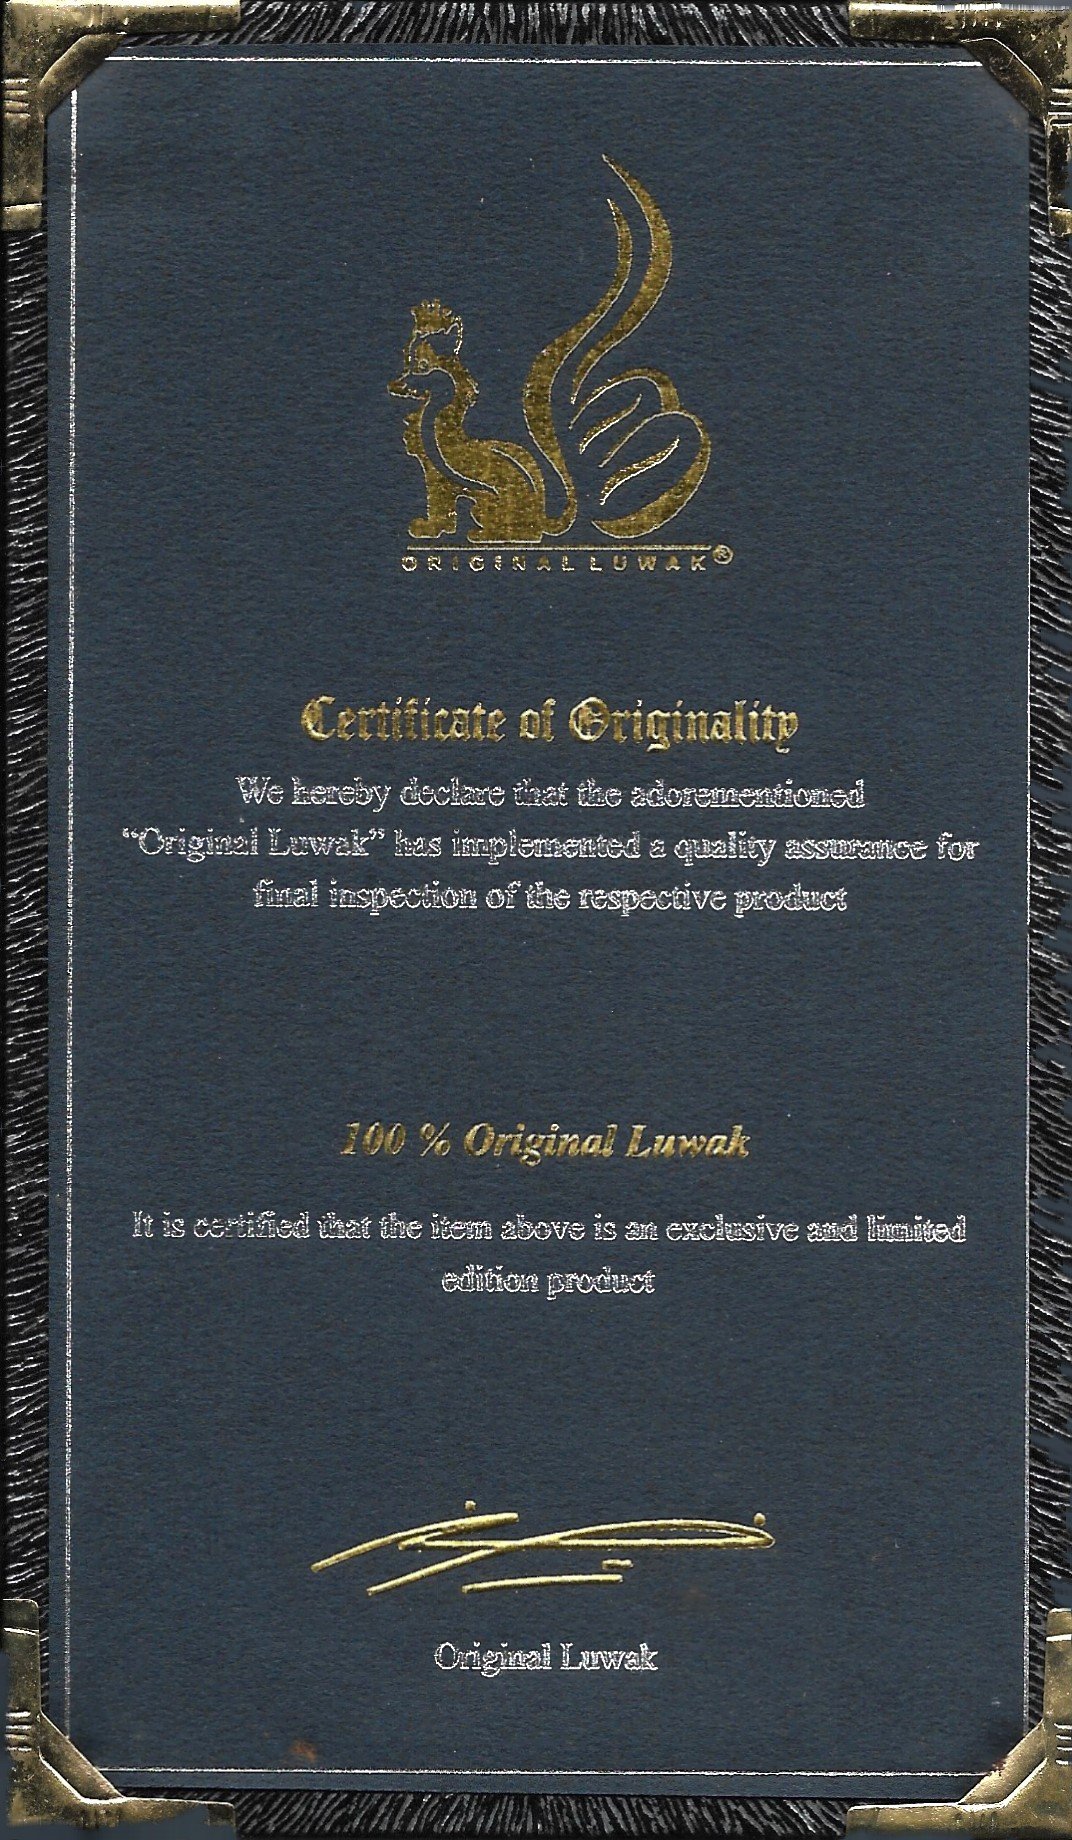 certificate of Originality